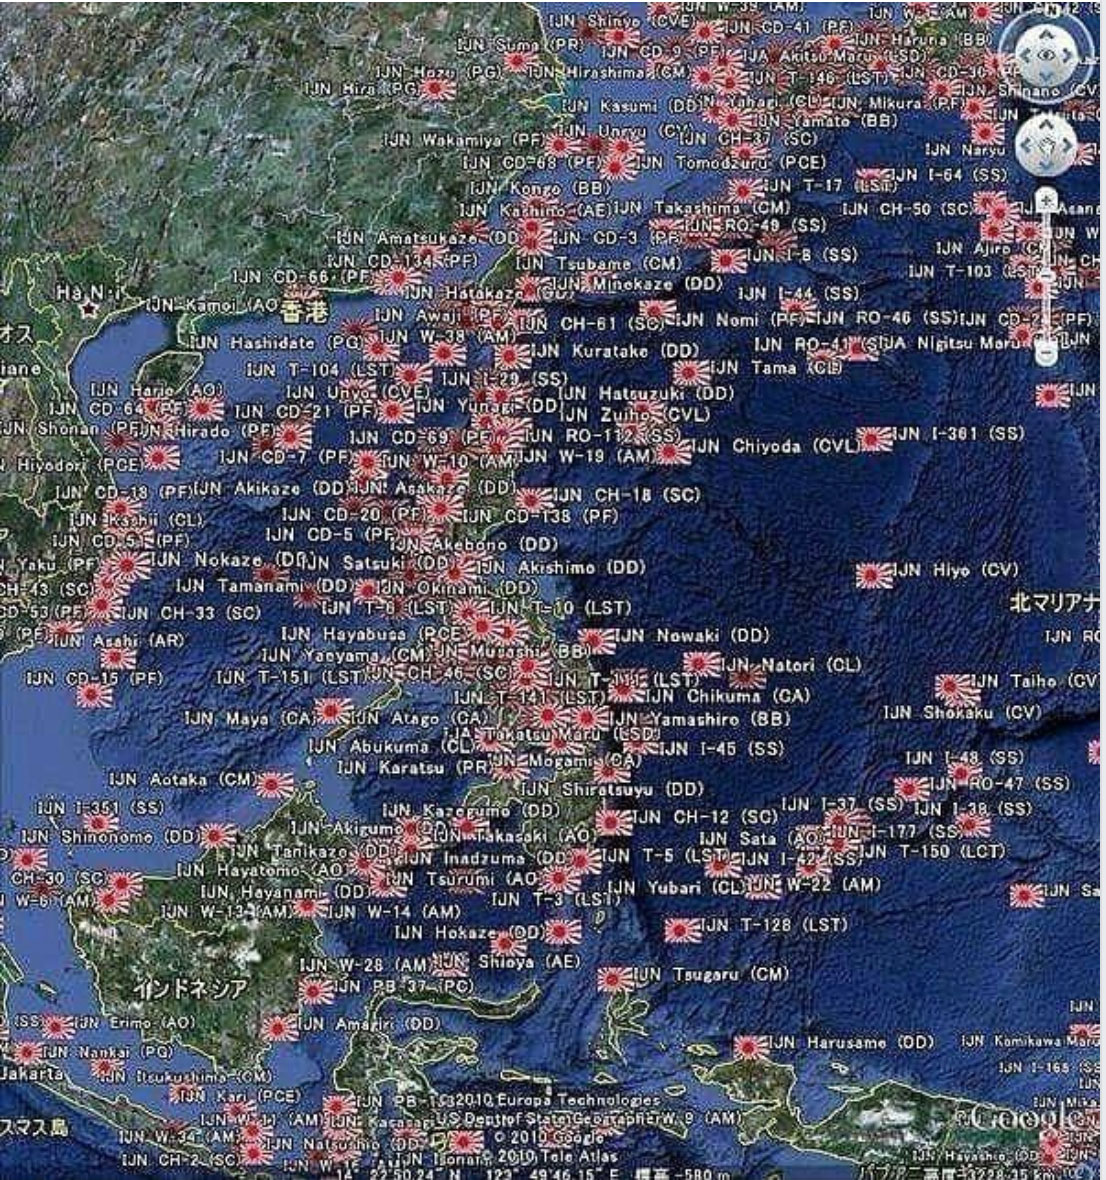 https://worldwarwings.com/wp-content/uploads/2018/06/ships-map.jpg